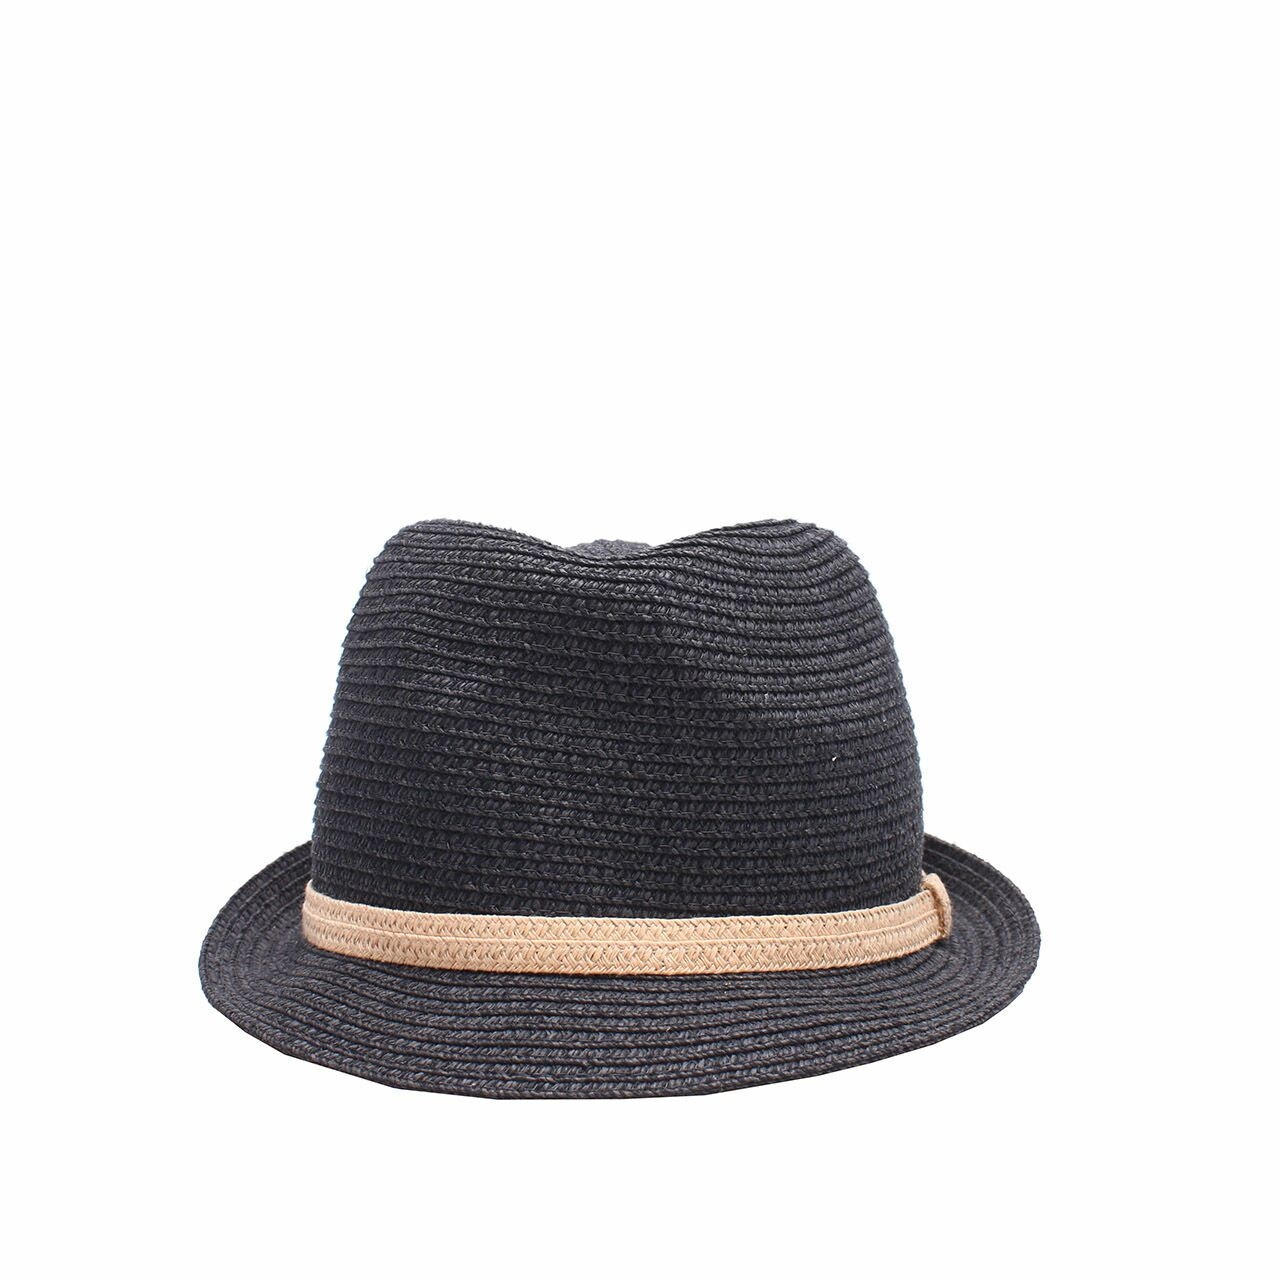 Forever 21 Black Hats